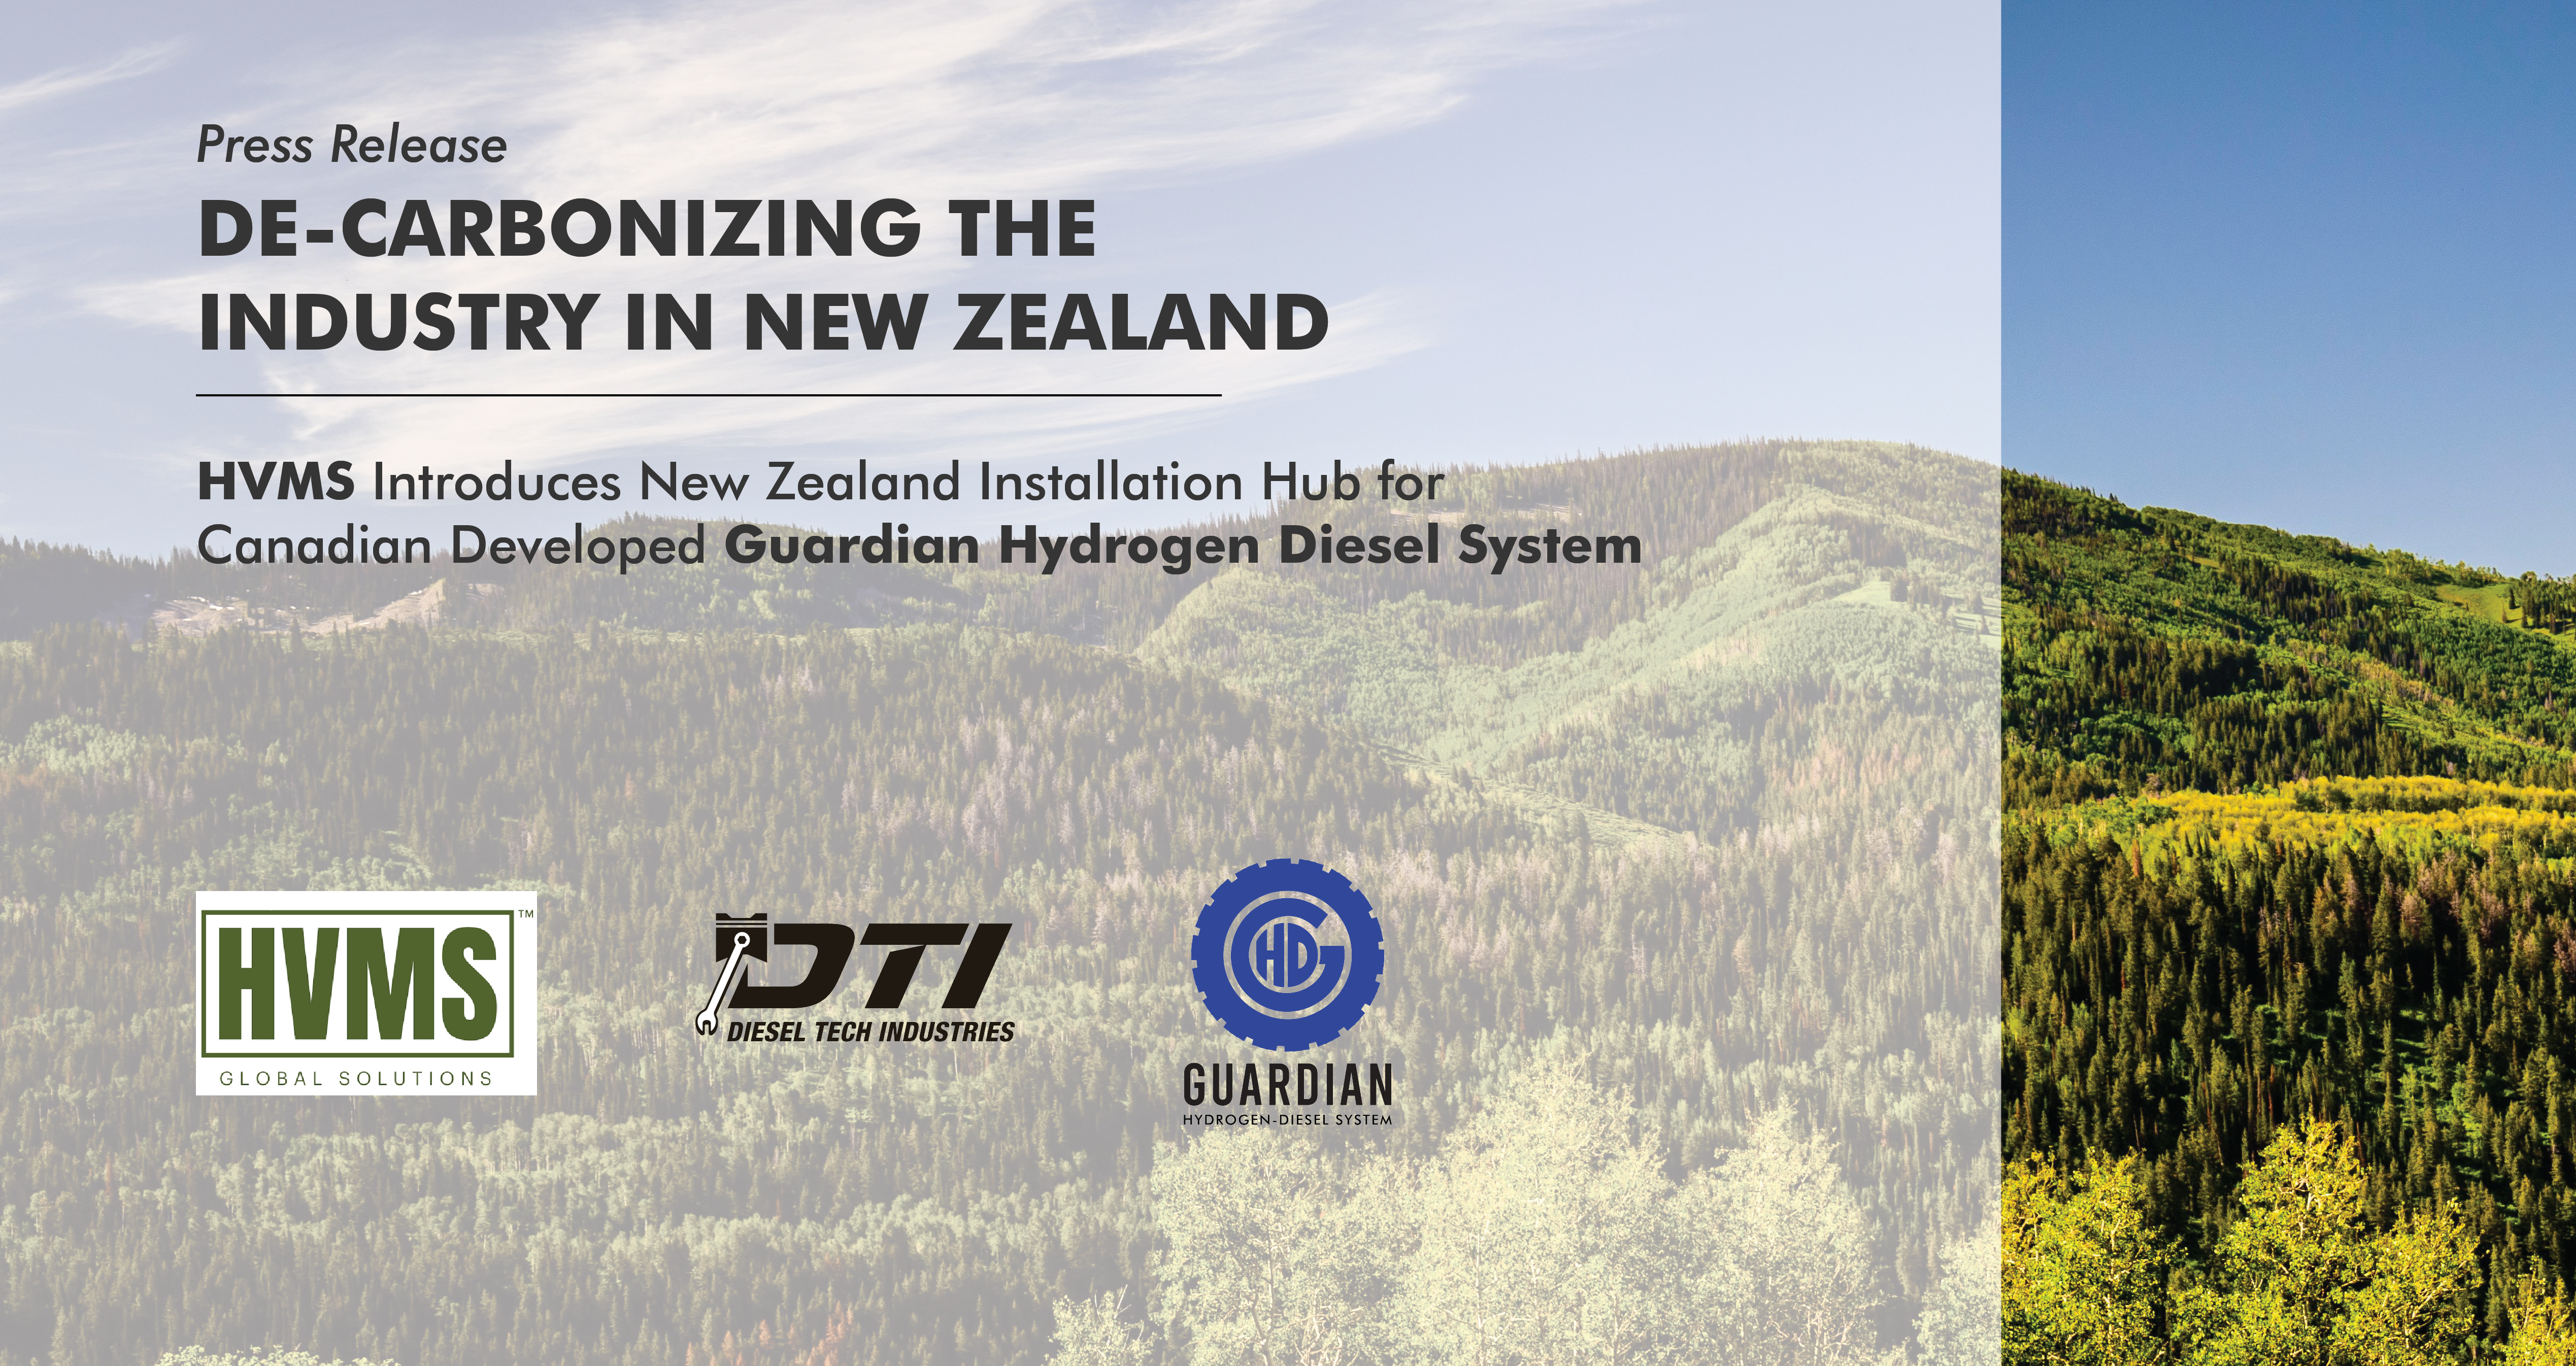 Press Release: HVMS Introduces New Zealand Installation Hub for Canadian Developed Guardian Hydrogen Diesel System